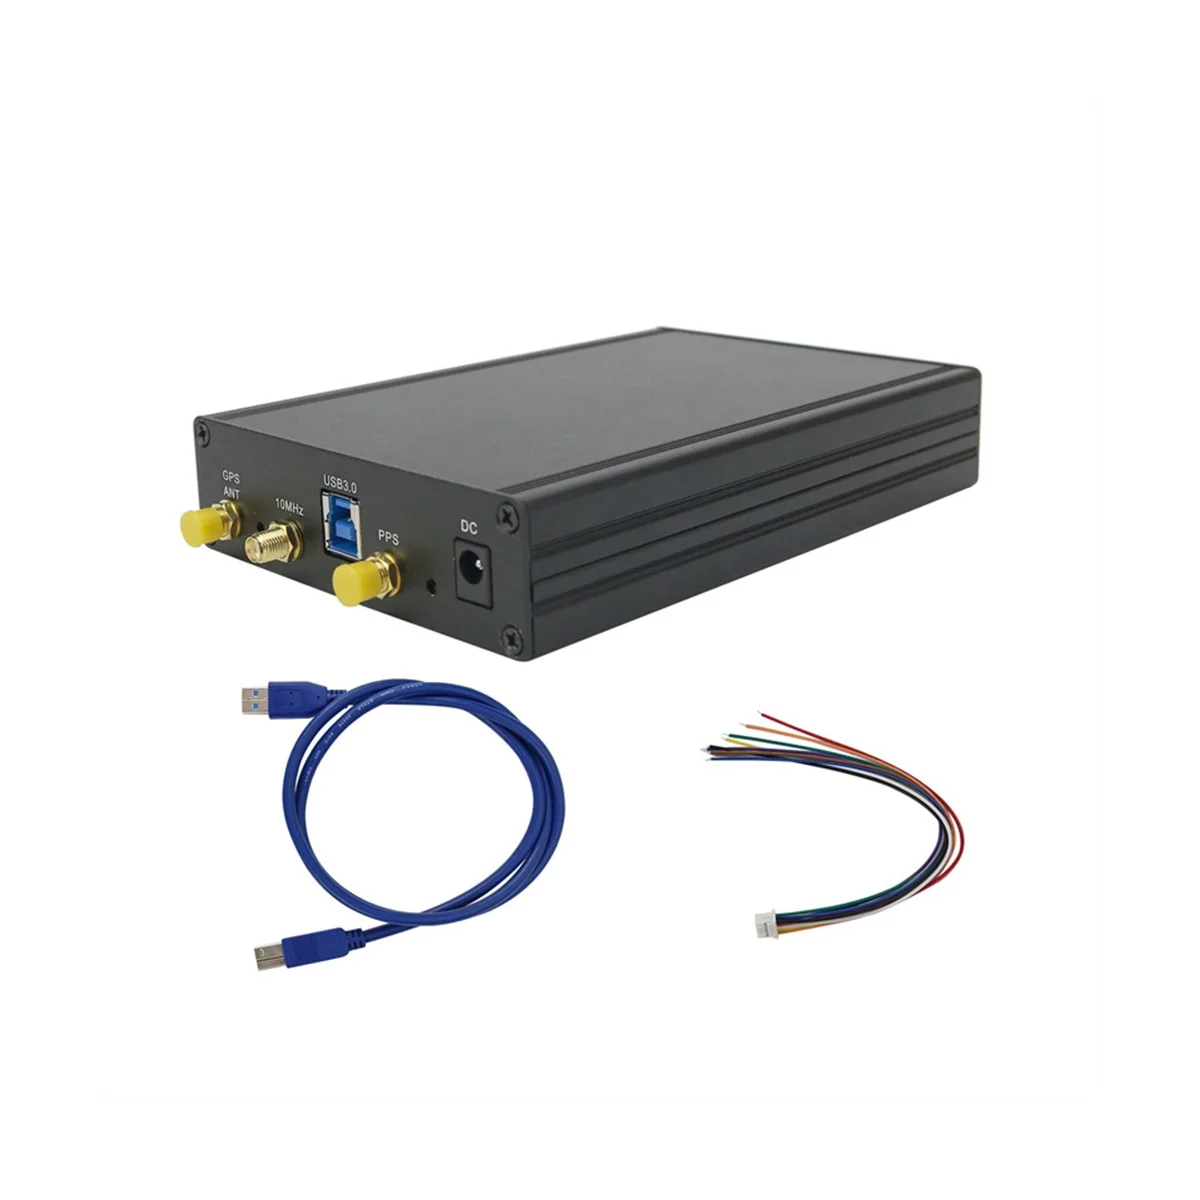 AD9361 RF 70 МГц-6 ГГц SDR Программируемое радио USB3.0 Совместимо с ETTUS USRP B210